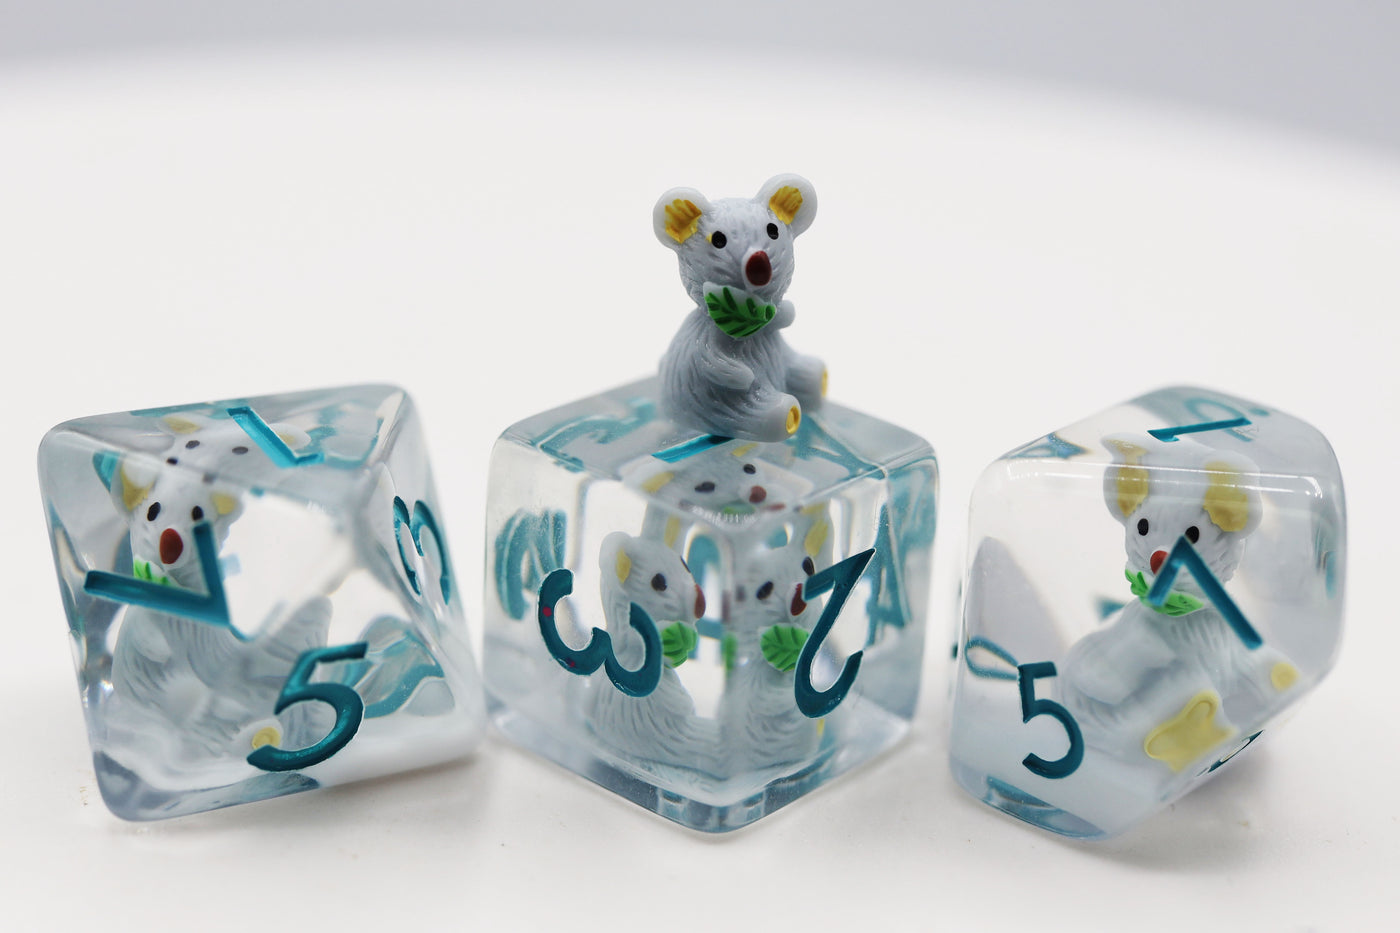 Koala RPG Dice Set Plastic Dice Foam Brain Games